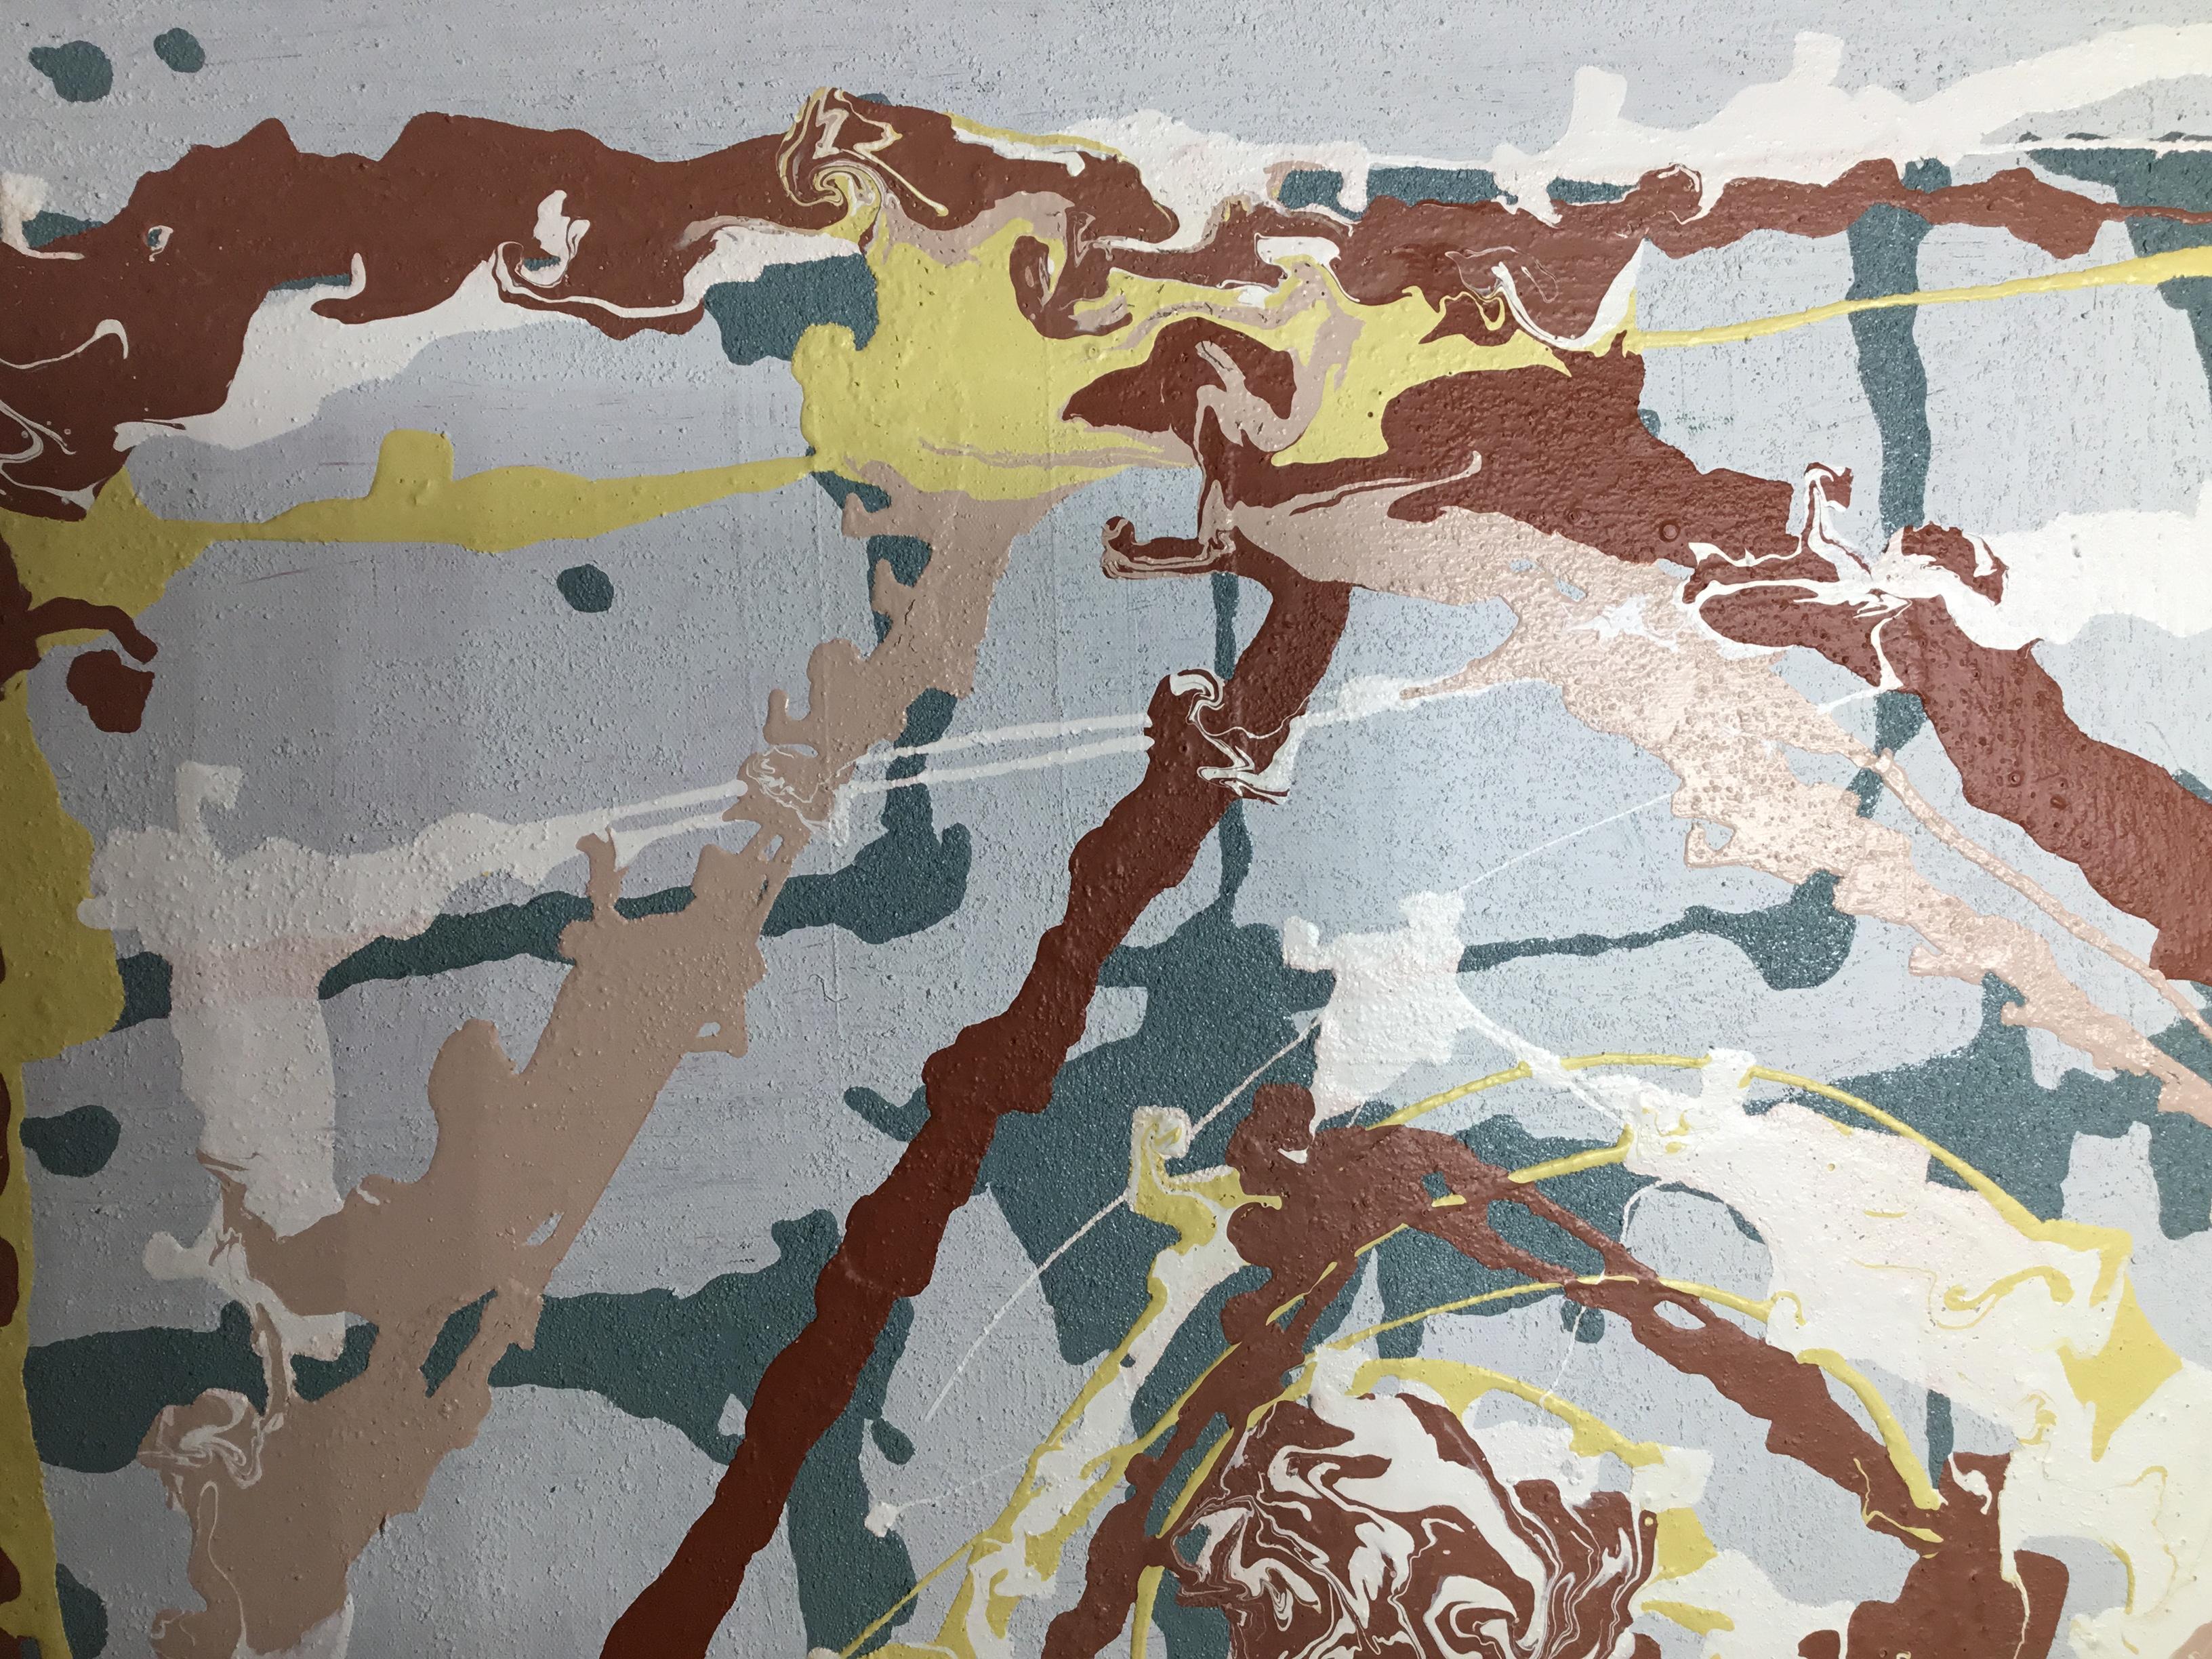 Joseph Malekan ‘Delray Beach’ Abstract Mixed-Media Painting For Sale 6